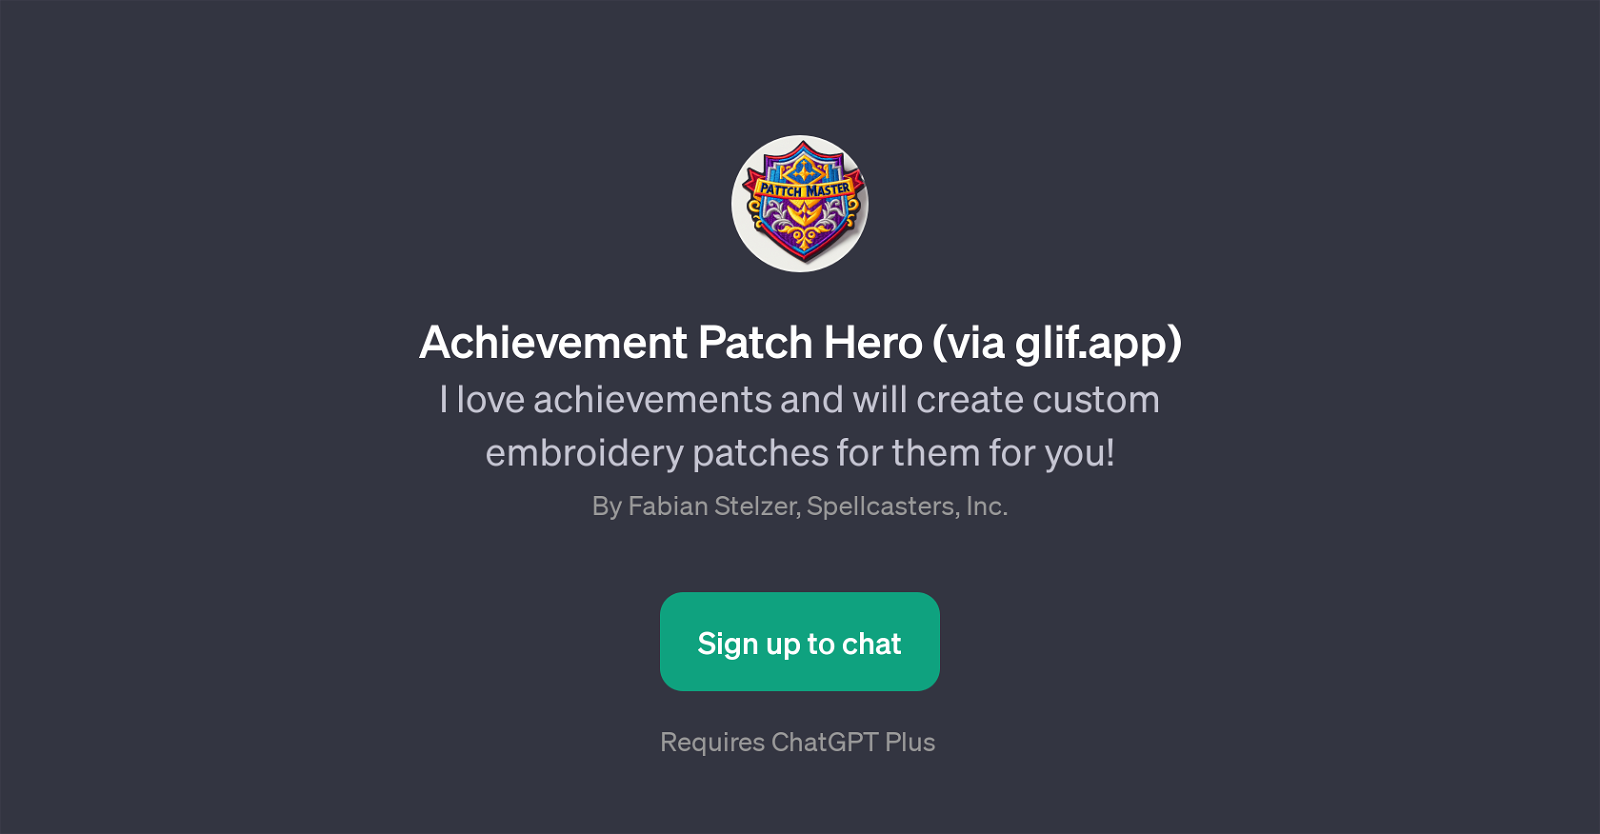 Achievement Patch Hero website